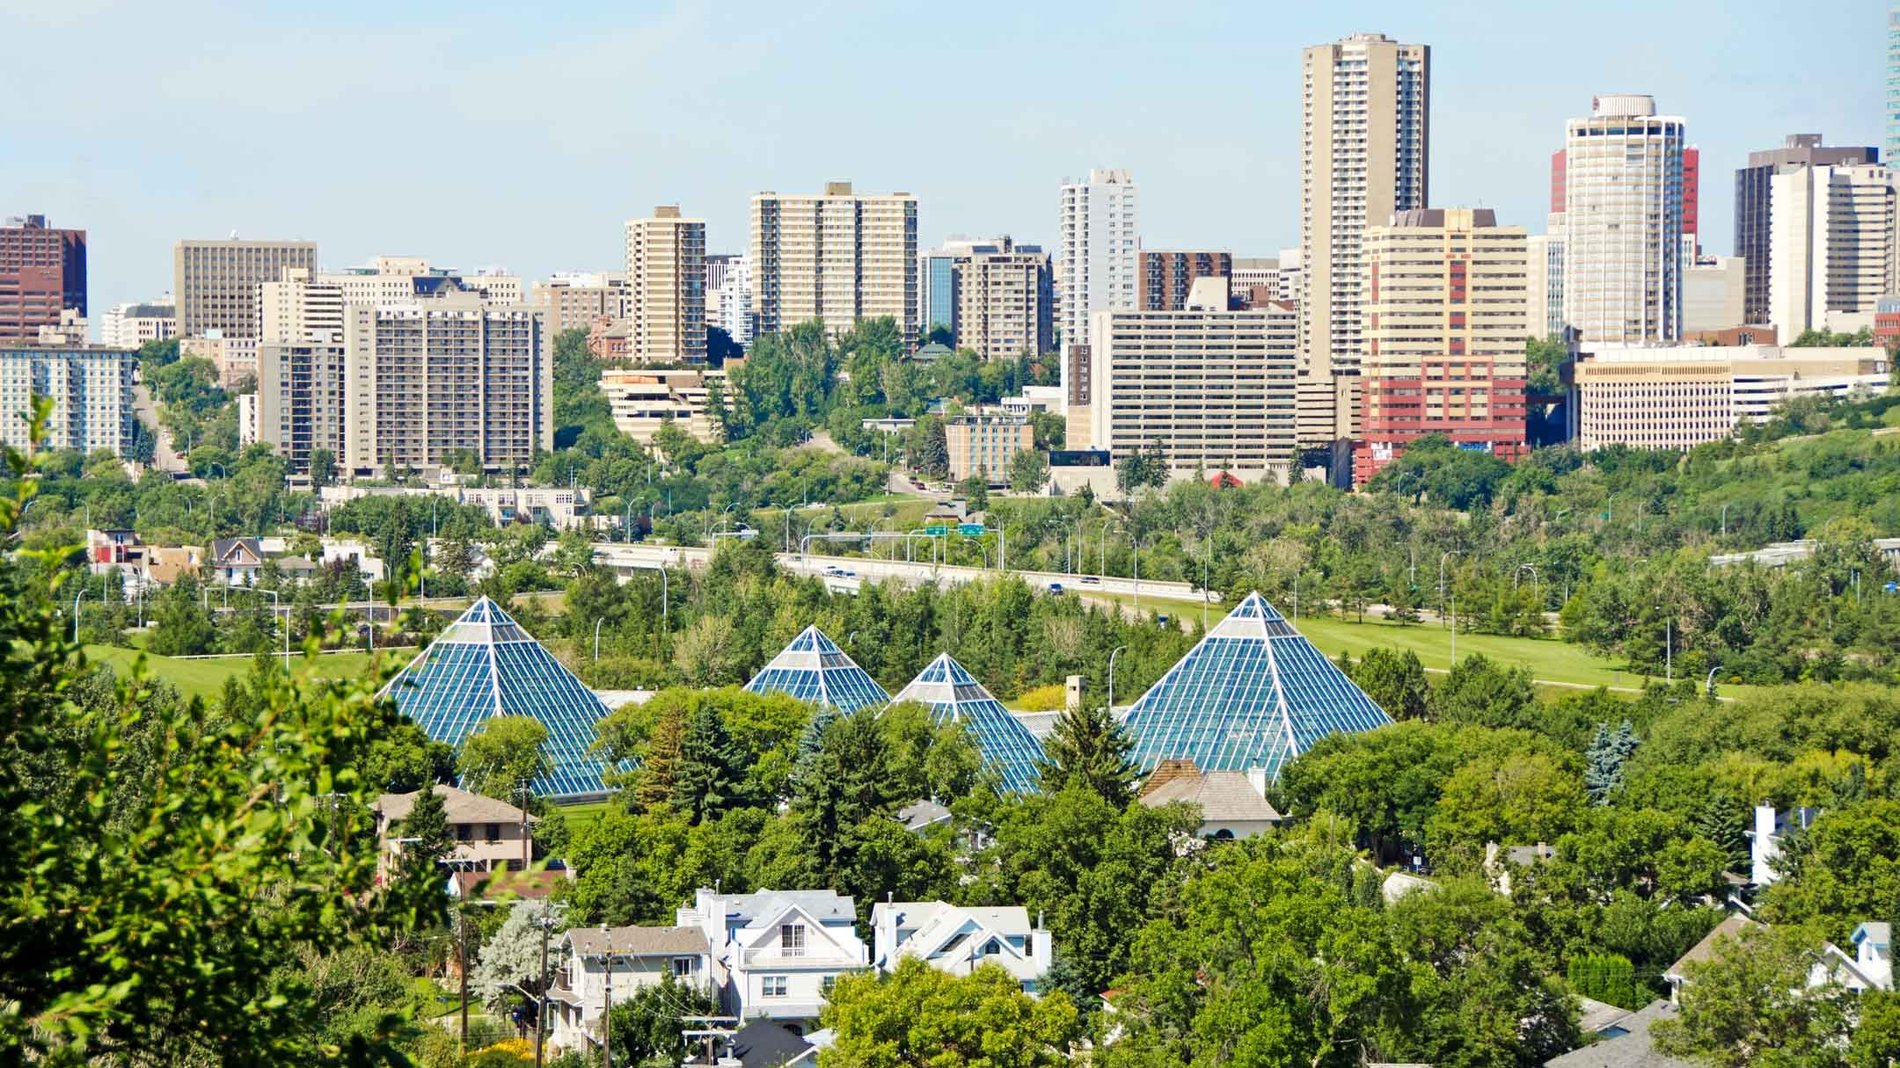 Edmonton Skyline and the greenhouse pyramids of the Muttart Conservatory